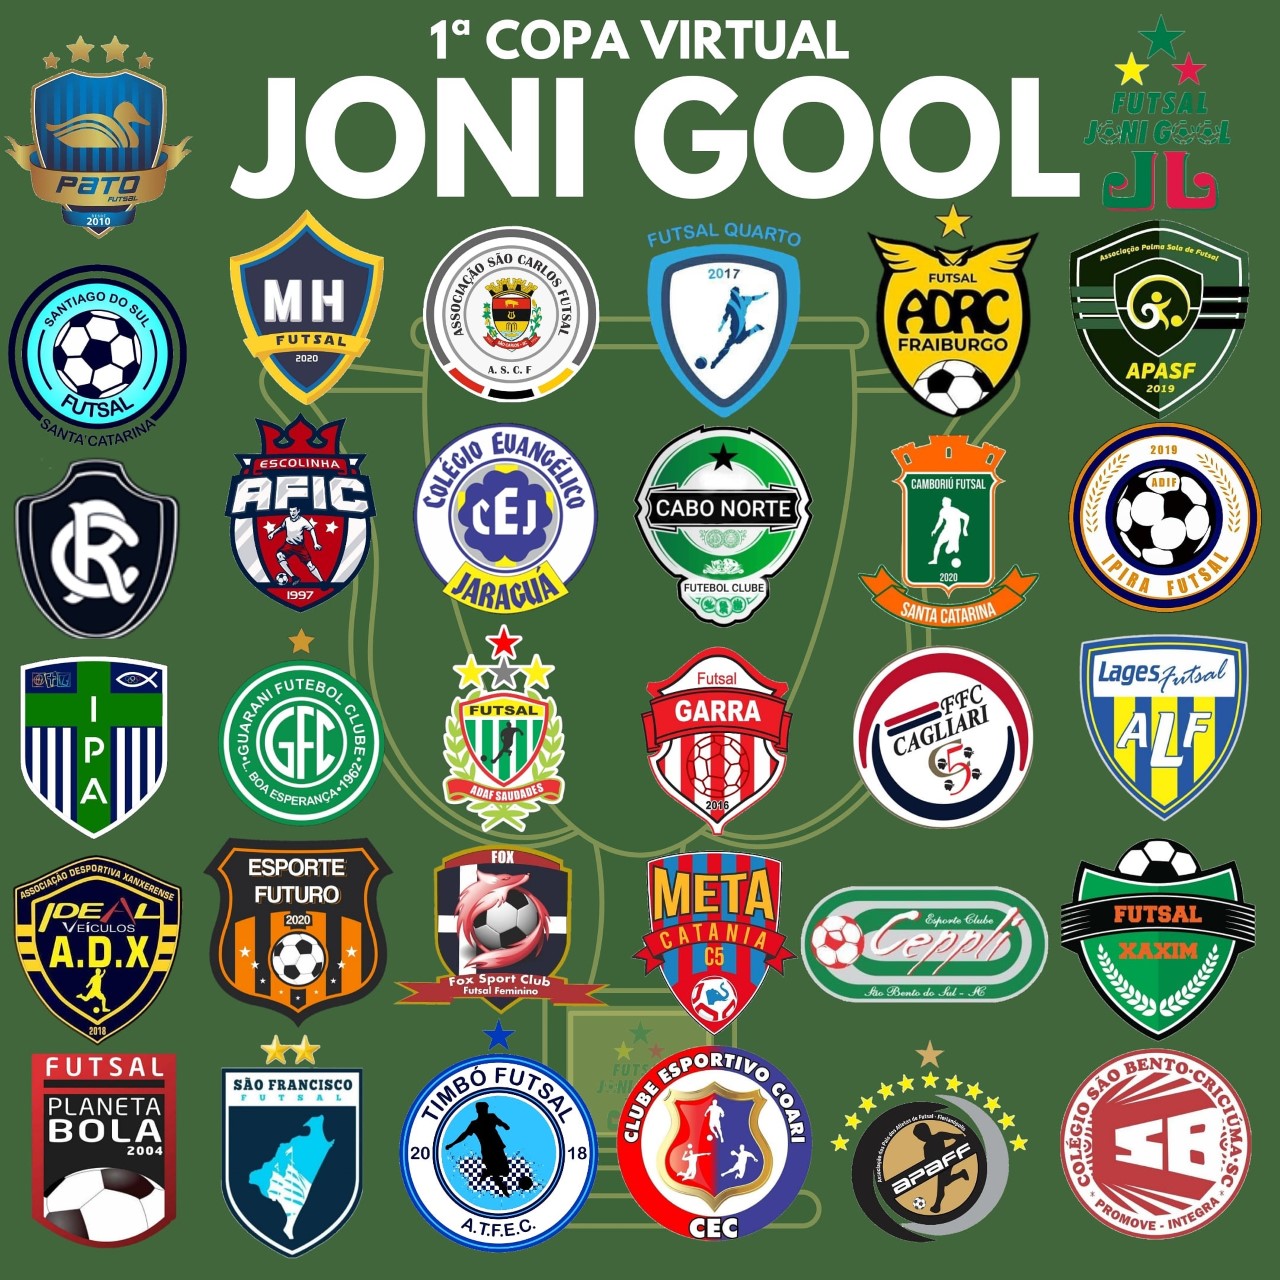 Inscrições encerradas para a 1ª Copa Virtual JONI GOOL